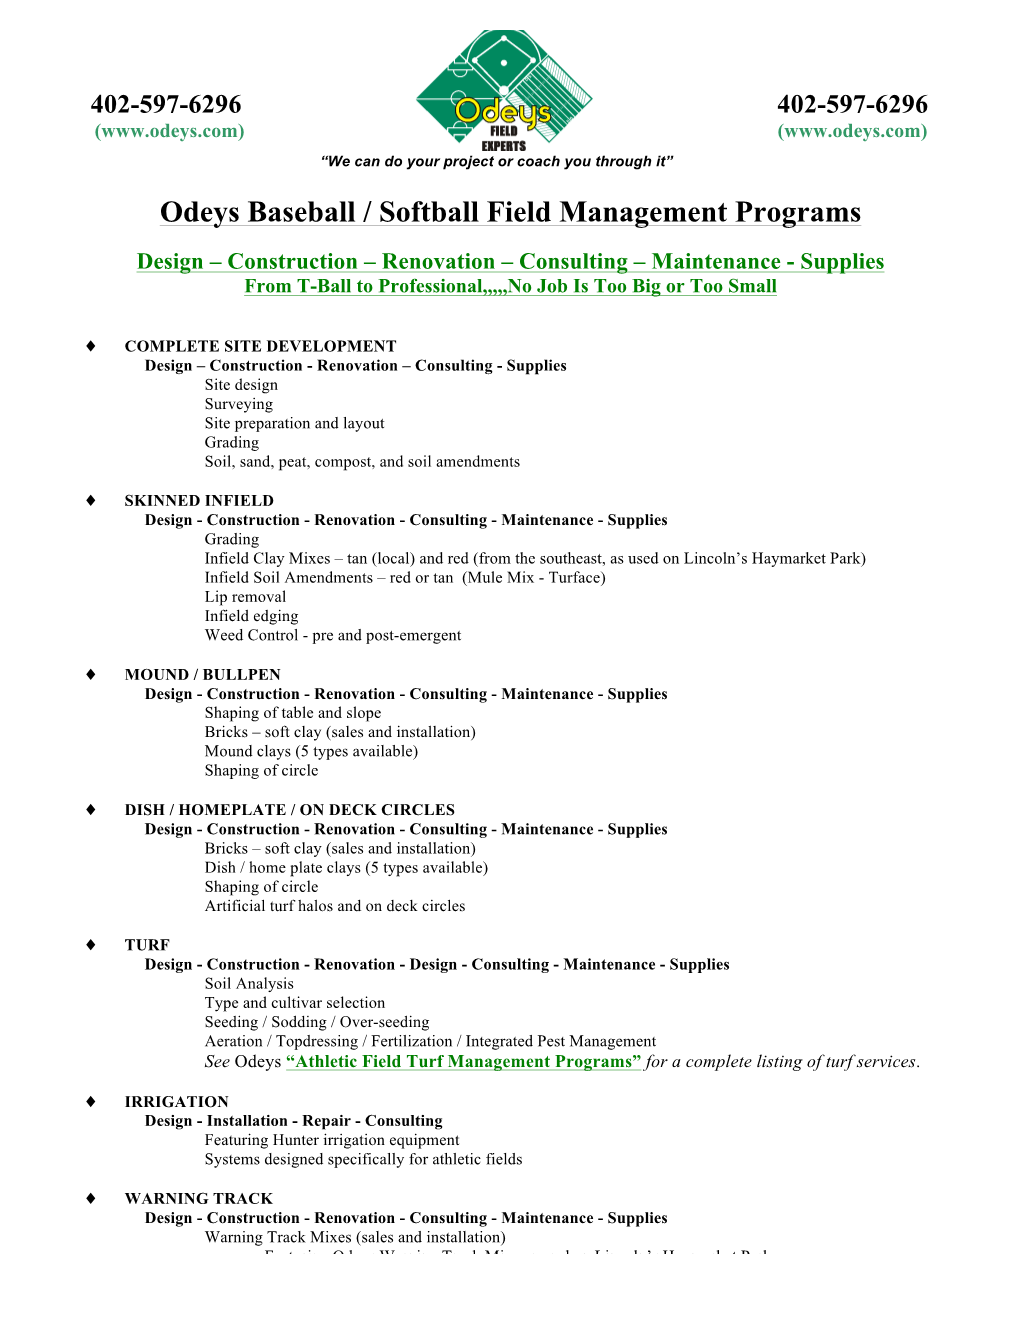 Baseball-Softball Field Management Programs